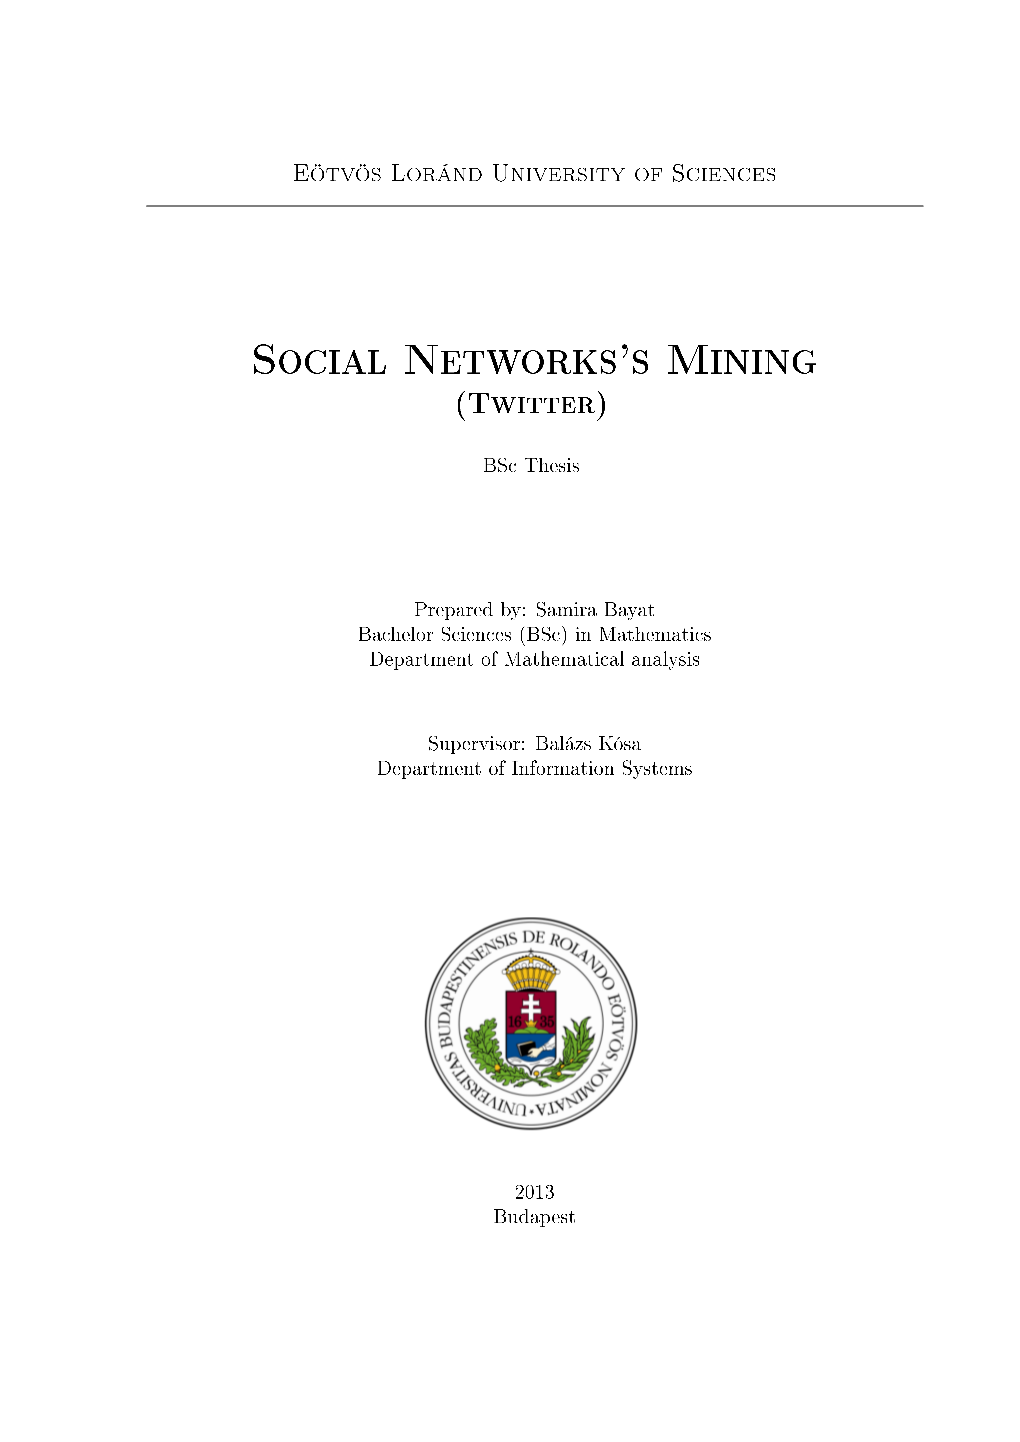 Social Networks's Mining (Twitter)